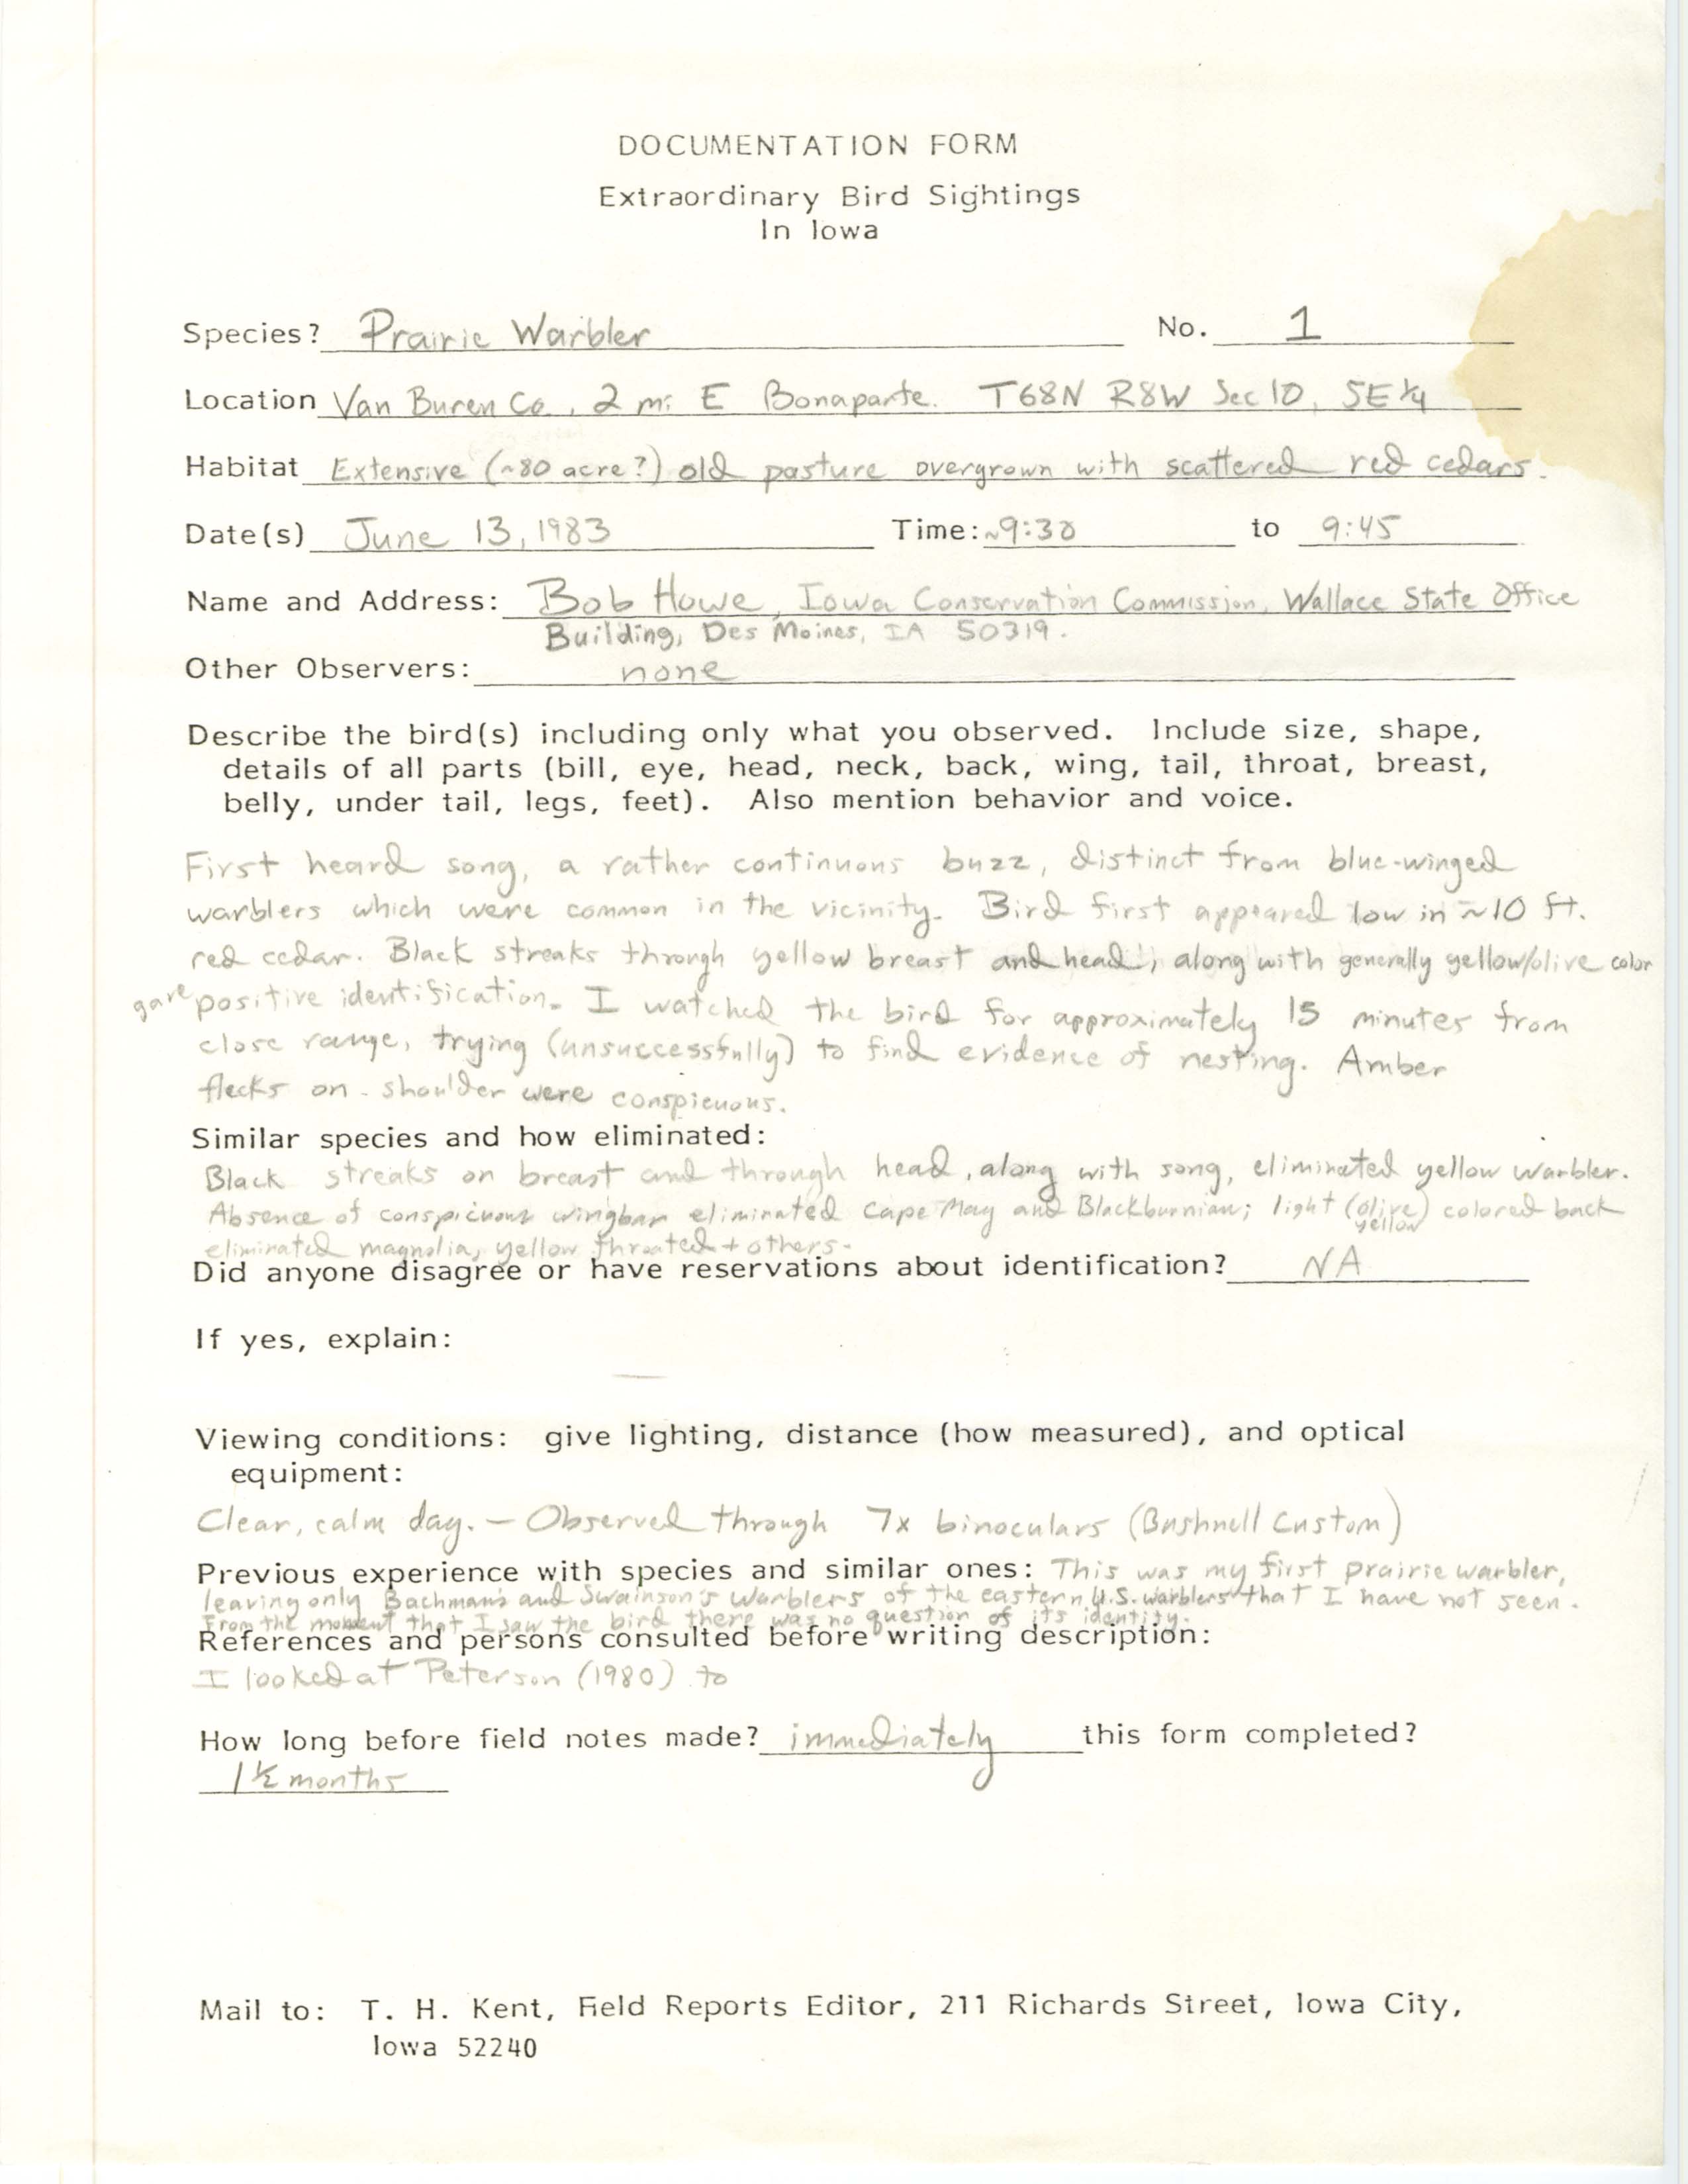 Rare bird documentation form for Prairie Warbler east of Bonaparte, 1983